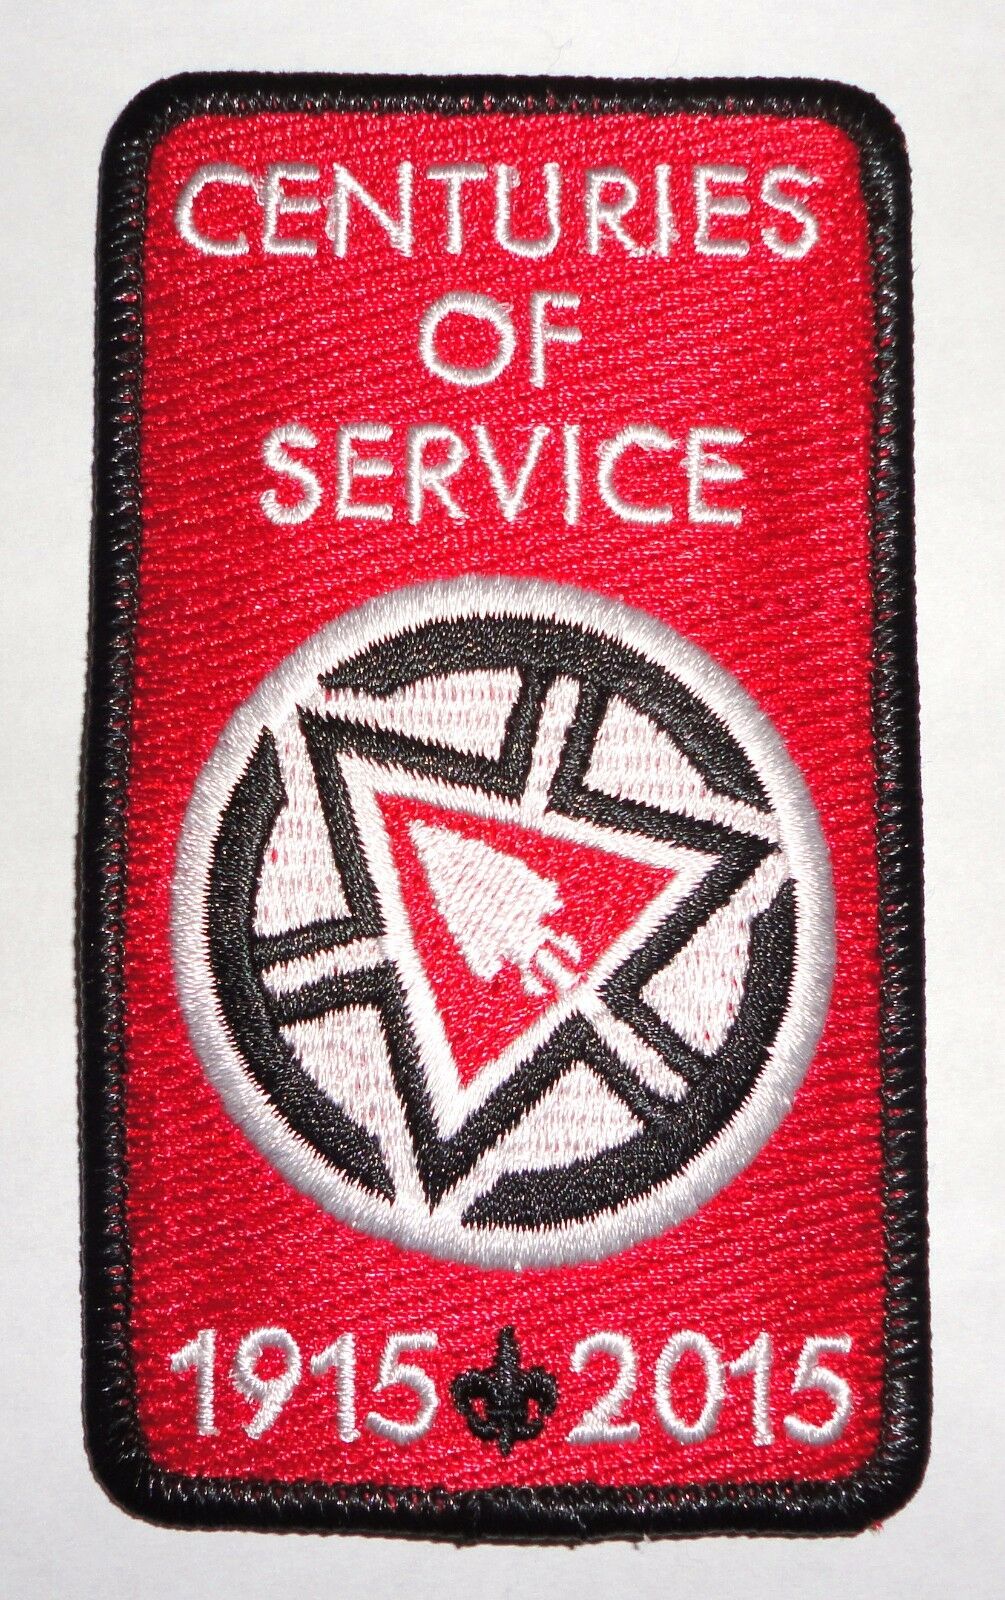 Order Of The Arrow 2015 Noac Oa Centennial Centuries Of Service Award Patch